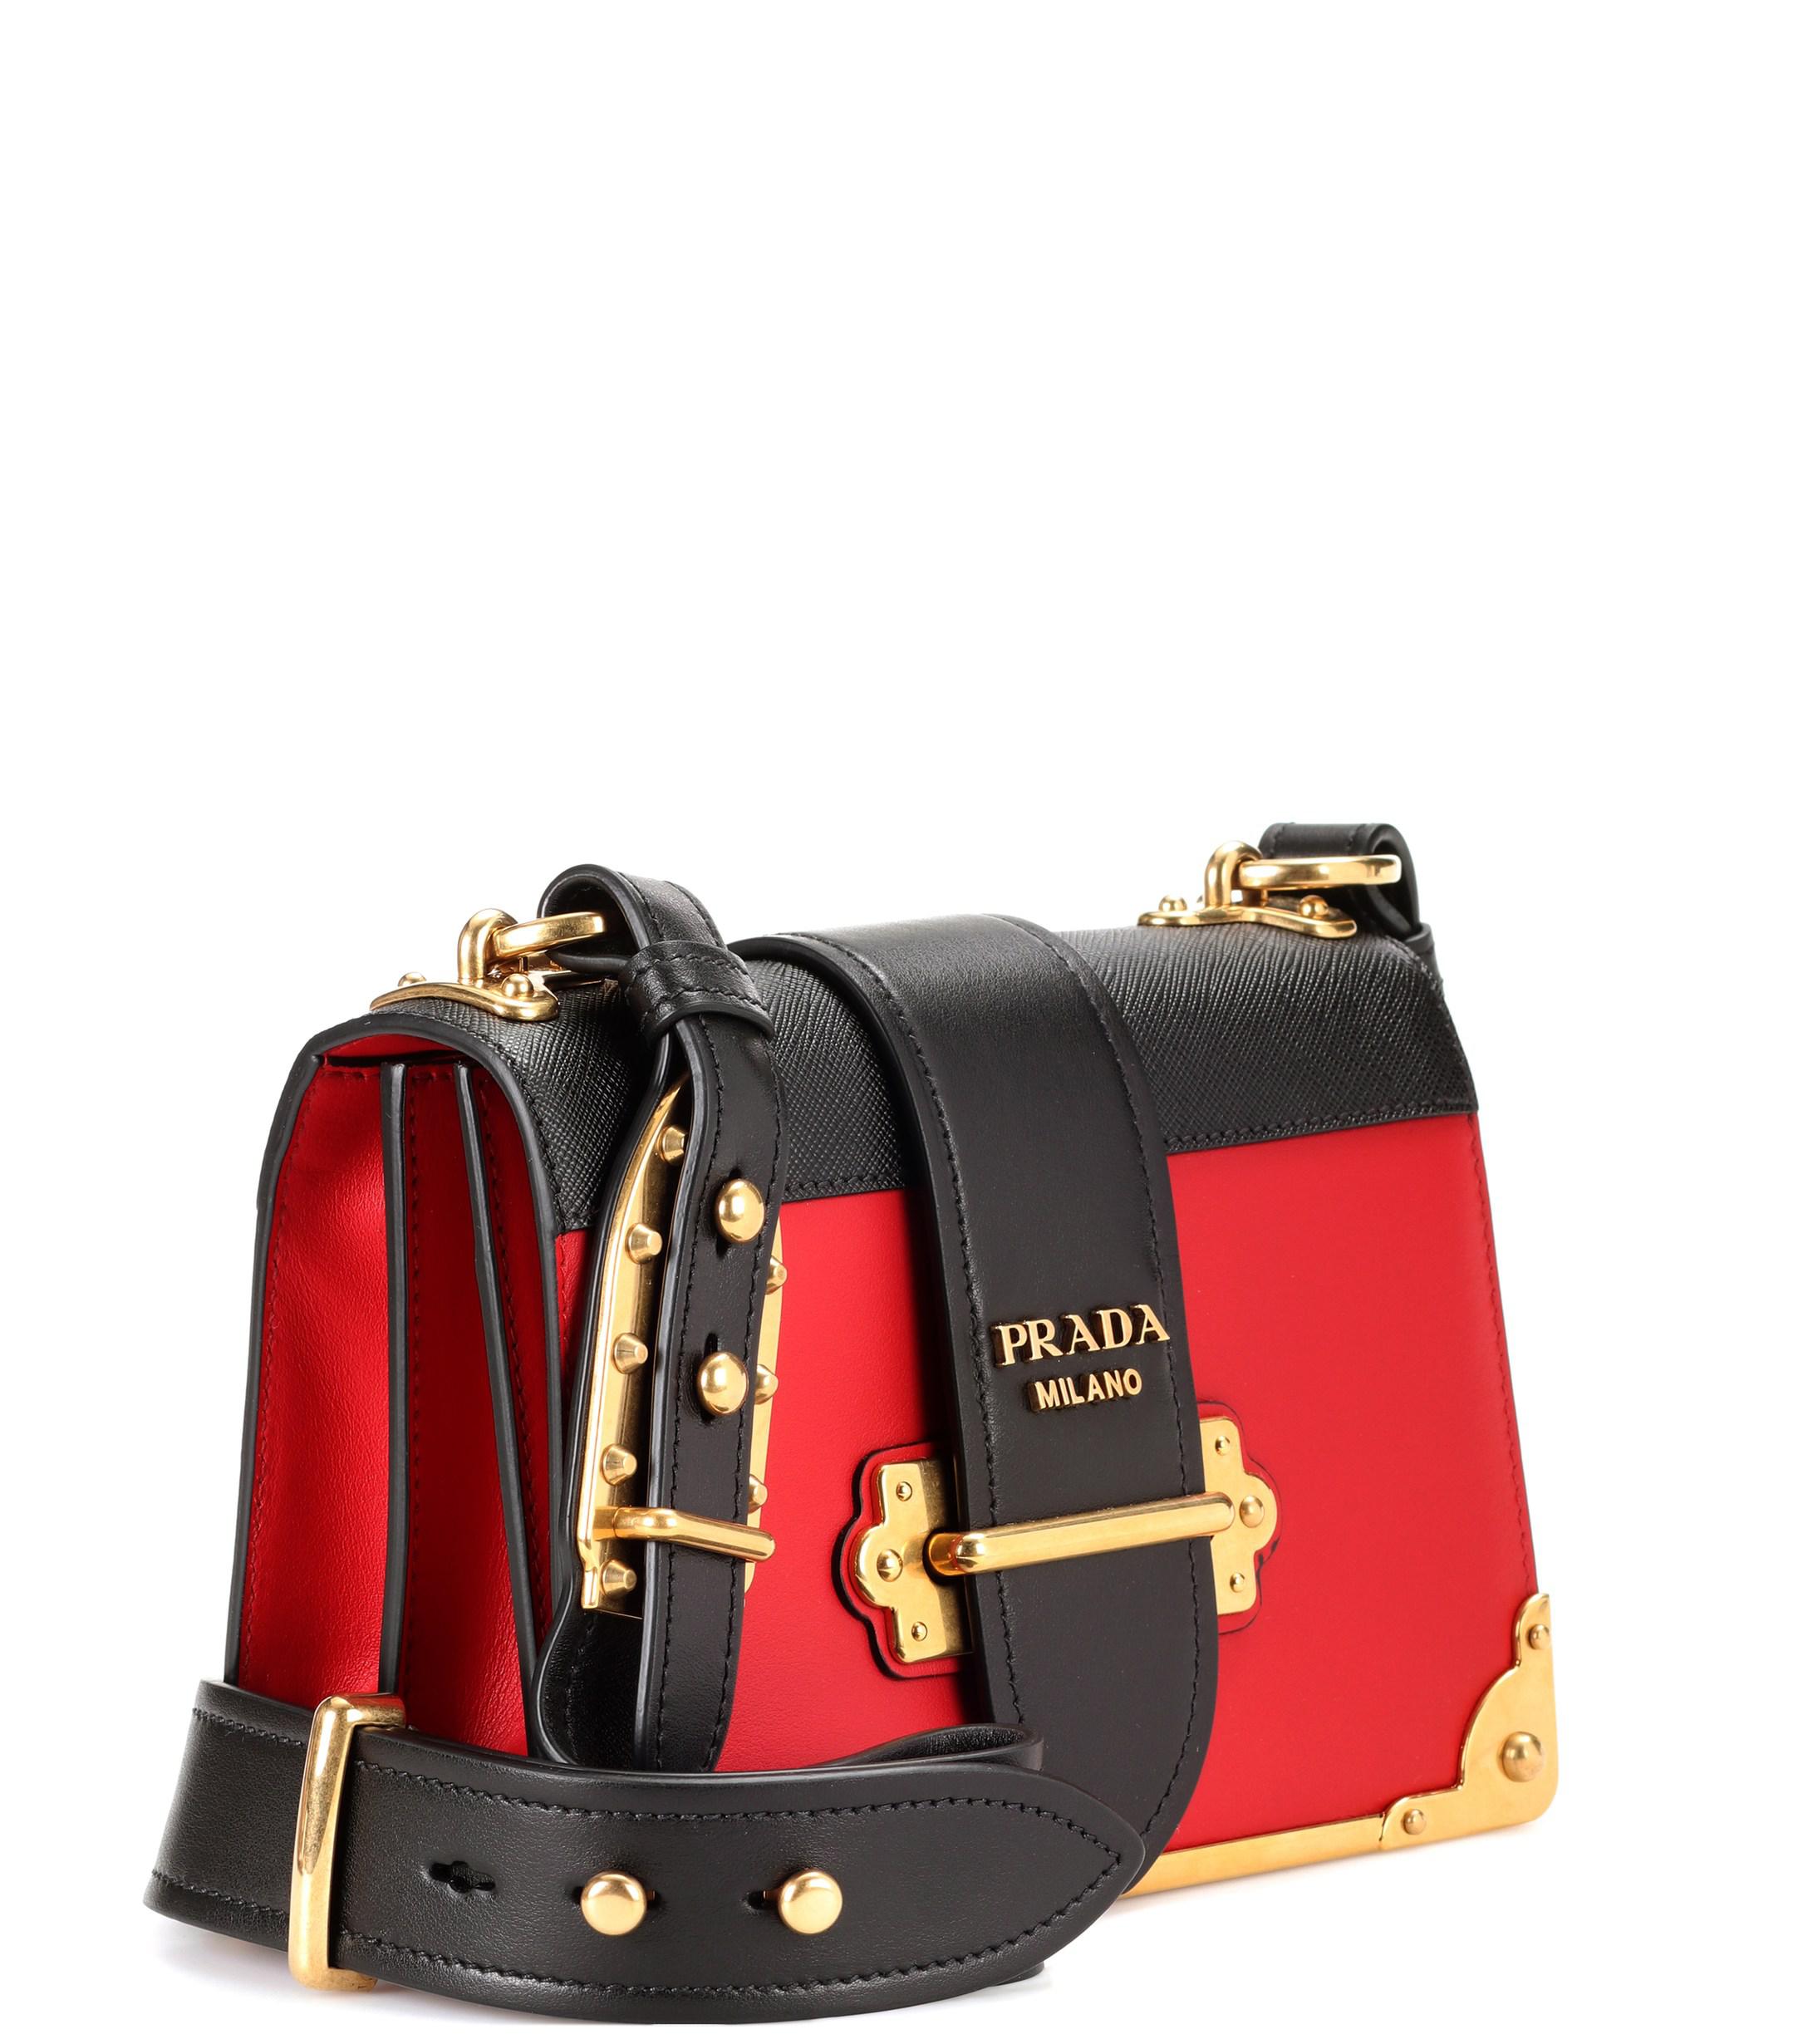 Prada Cahier Leather Shoulder Bag in Red - Lyst